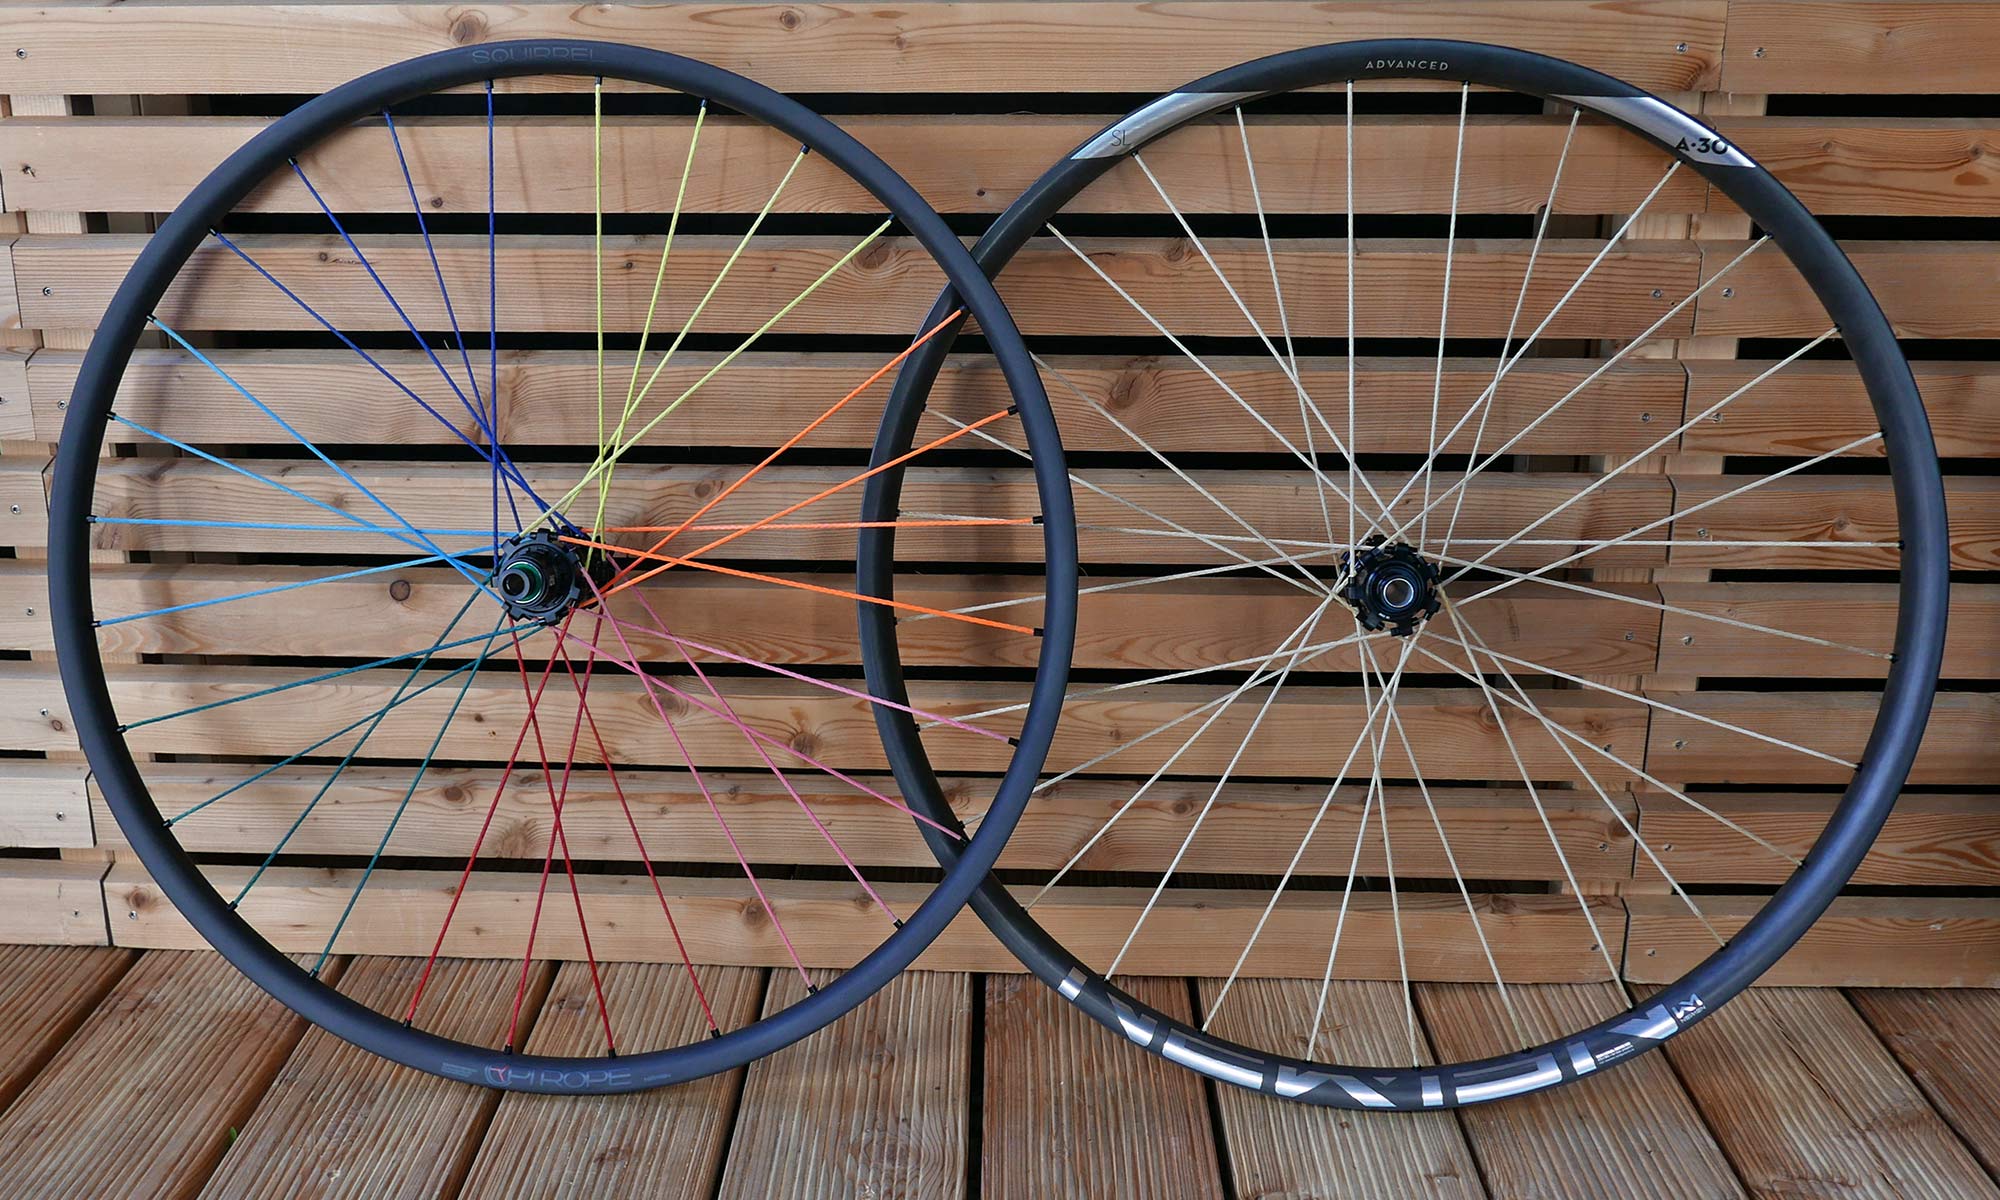 Pi Rope rainbow ultralight braided Vectran fiber spoke wheels, more options